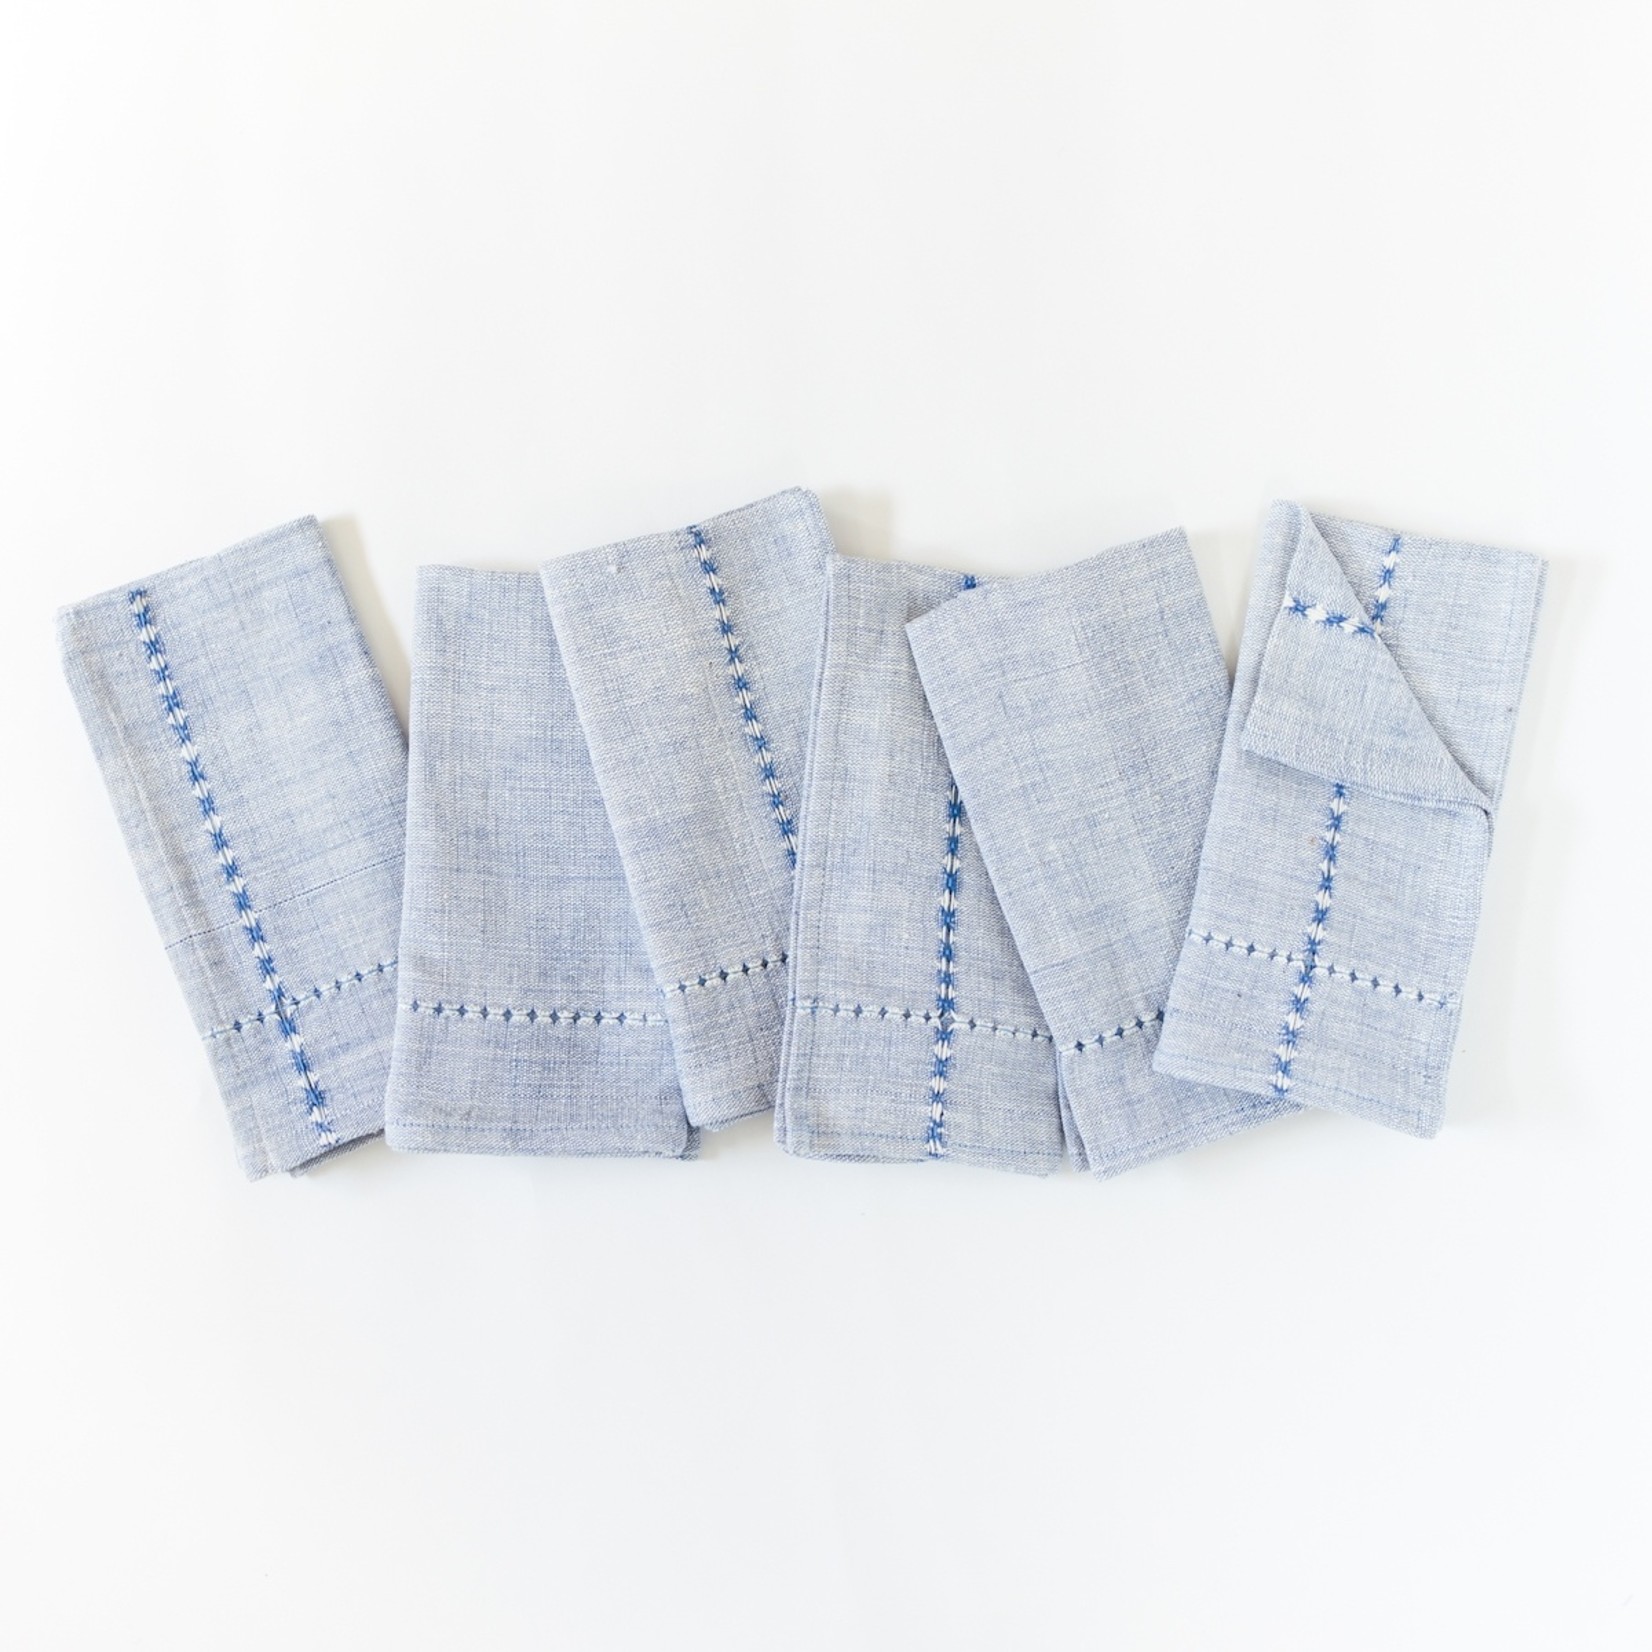 Creative Women Pulled Cotton Napkins (Set of 6)